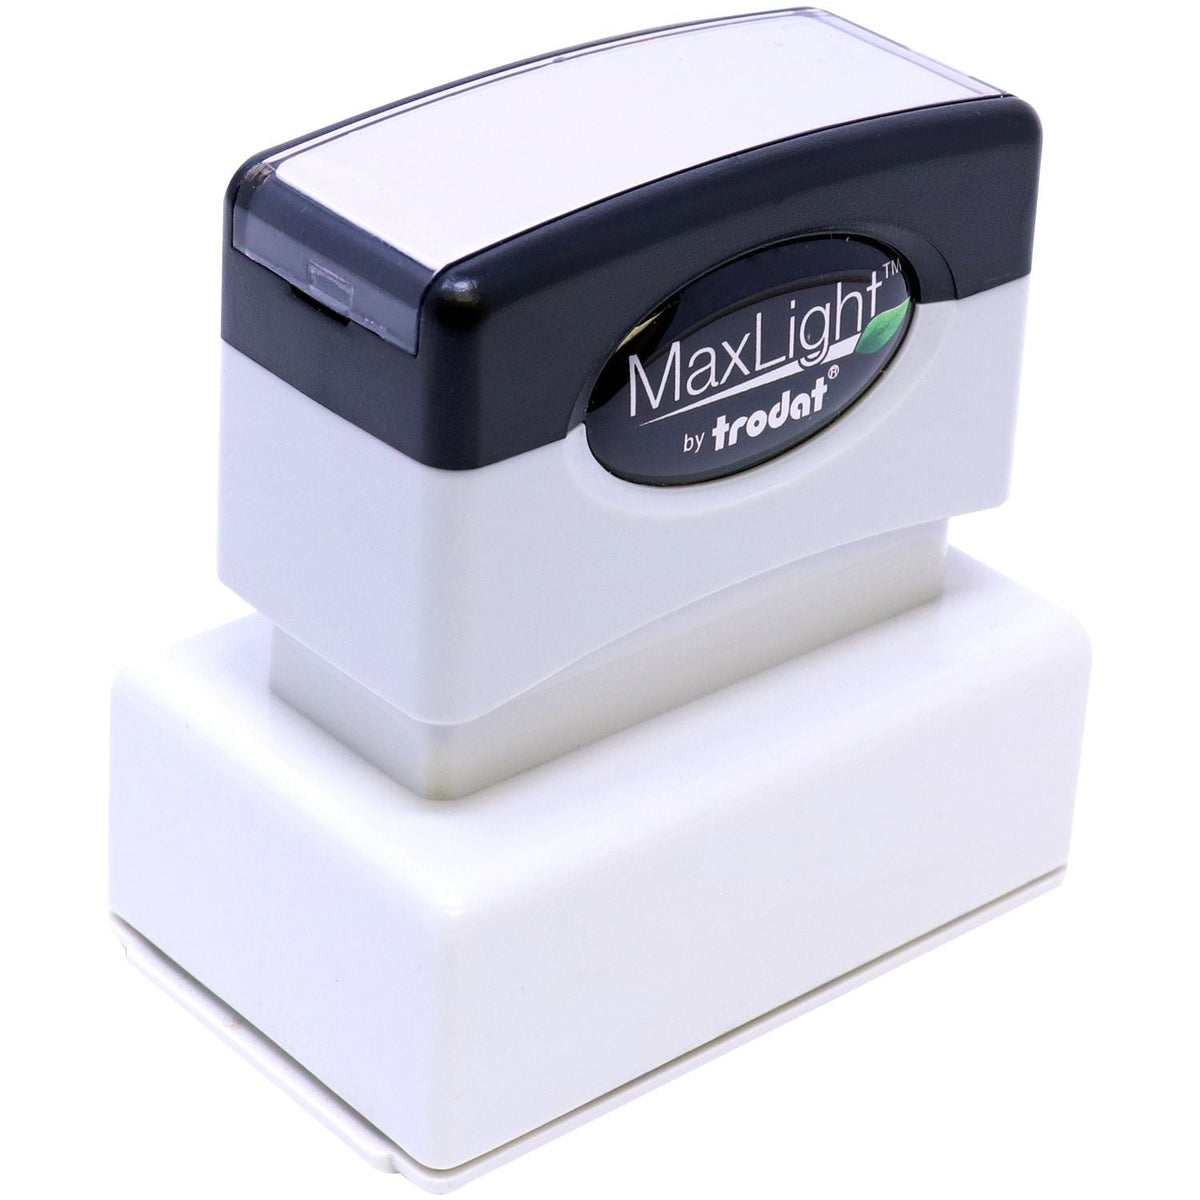 Maxlight Custom Stamp Xl2 245 Top Front Angle